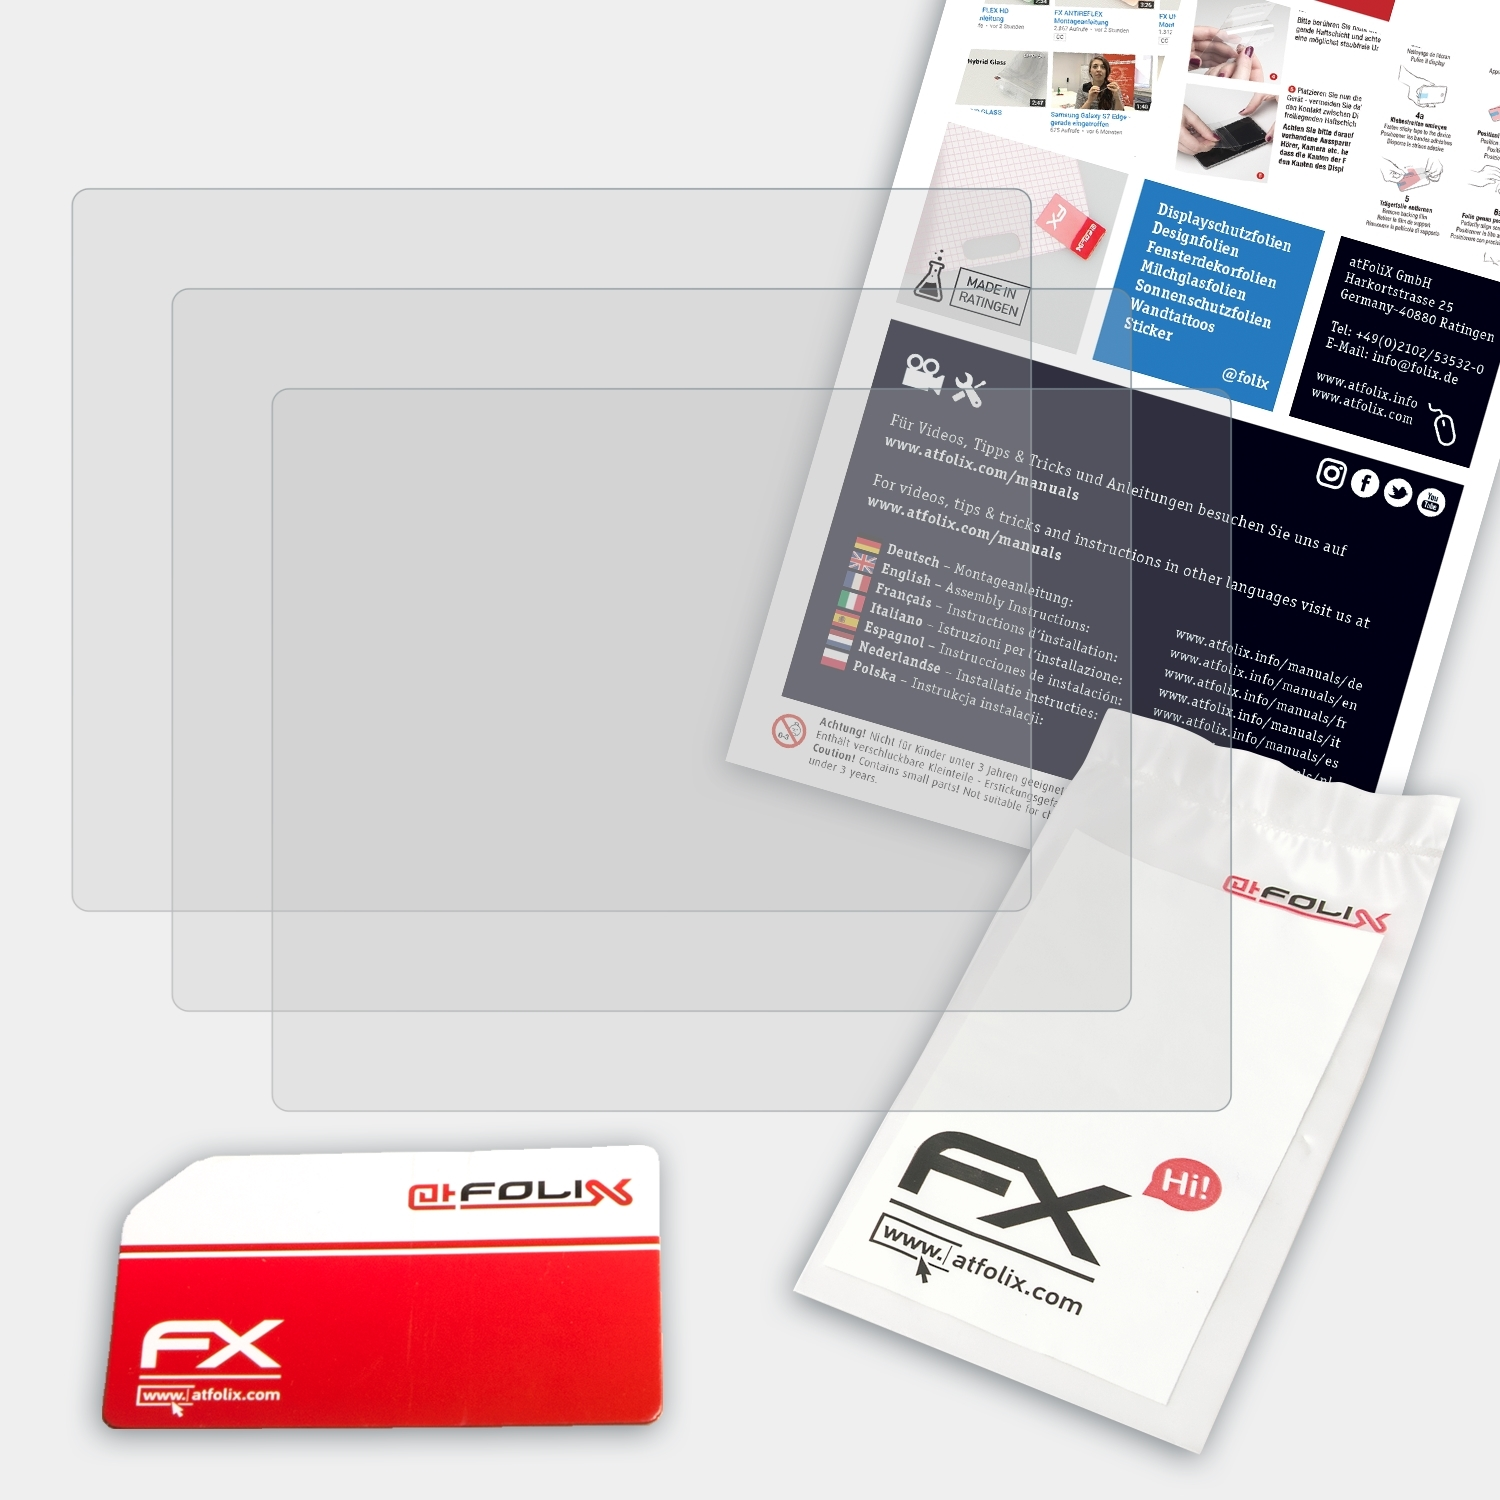 ATFOLIX 3x Fujifilm FX-Antireflex Displayschutz(für X100) FinePix